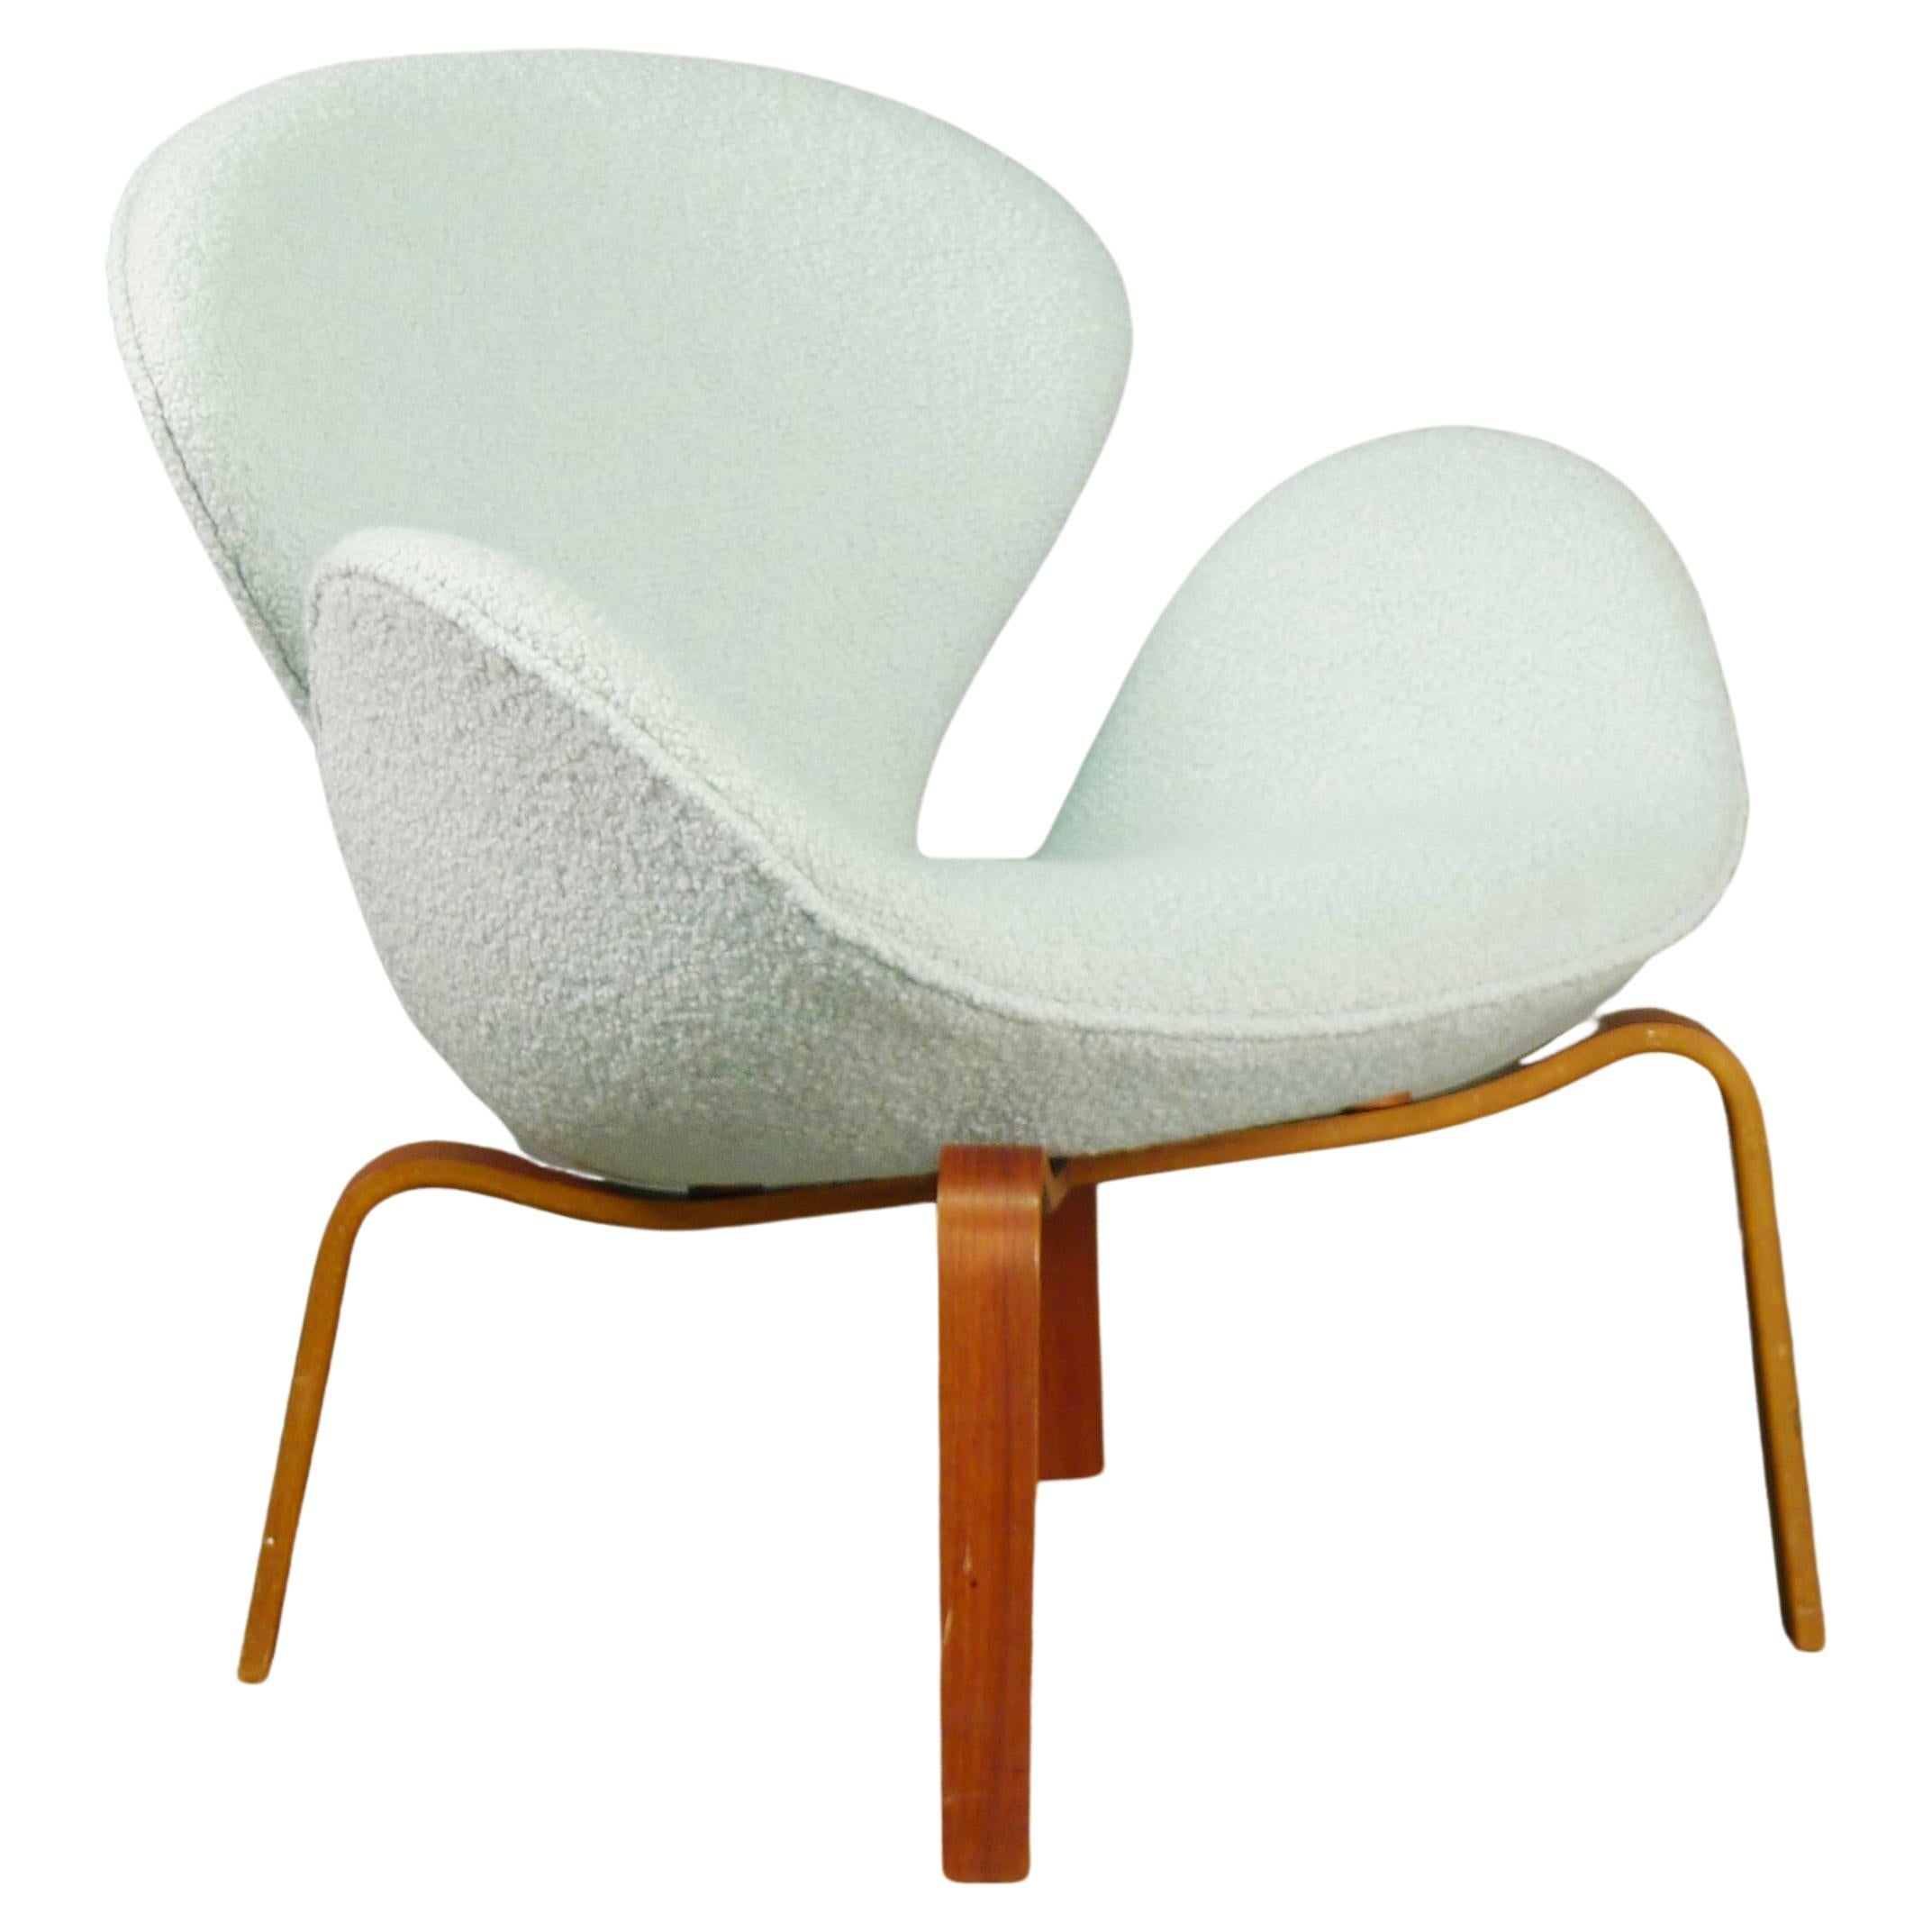 Arne Jacobsen, Swan Chair, rare version wood legs, 1965, by Fritz Hansen, FH4325 For Sale